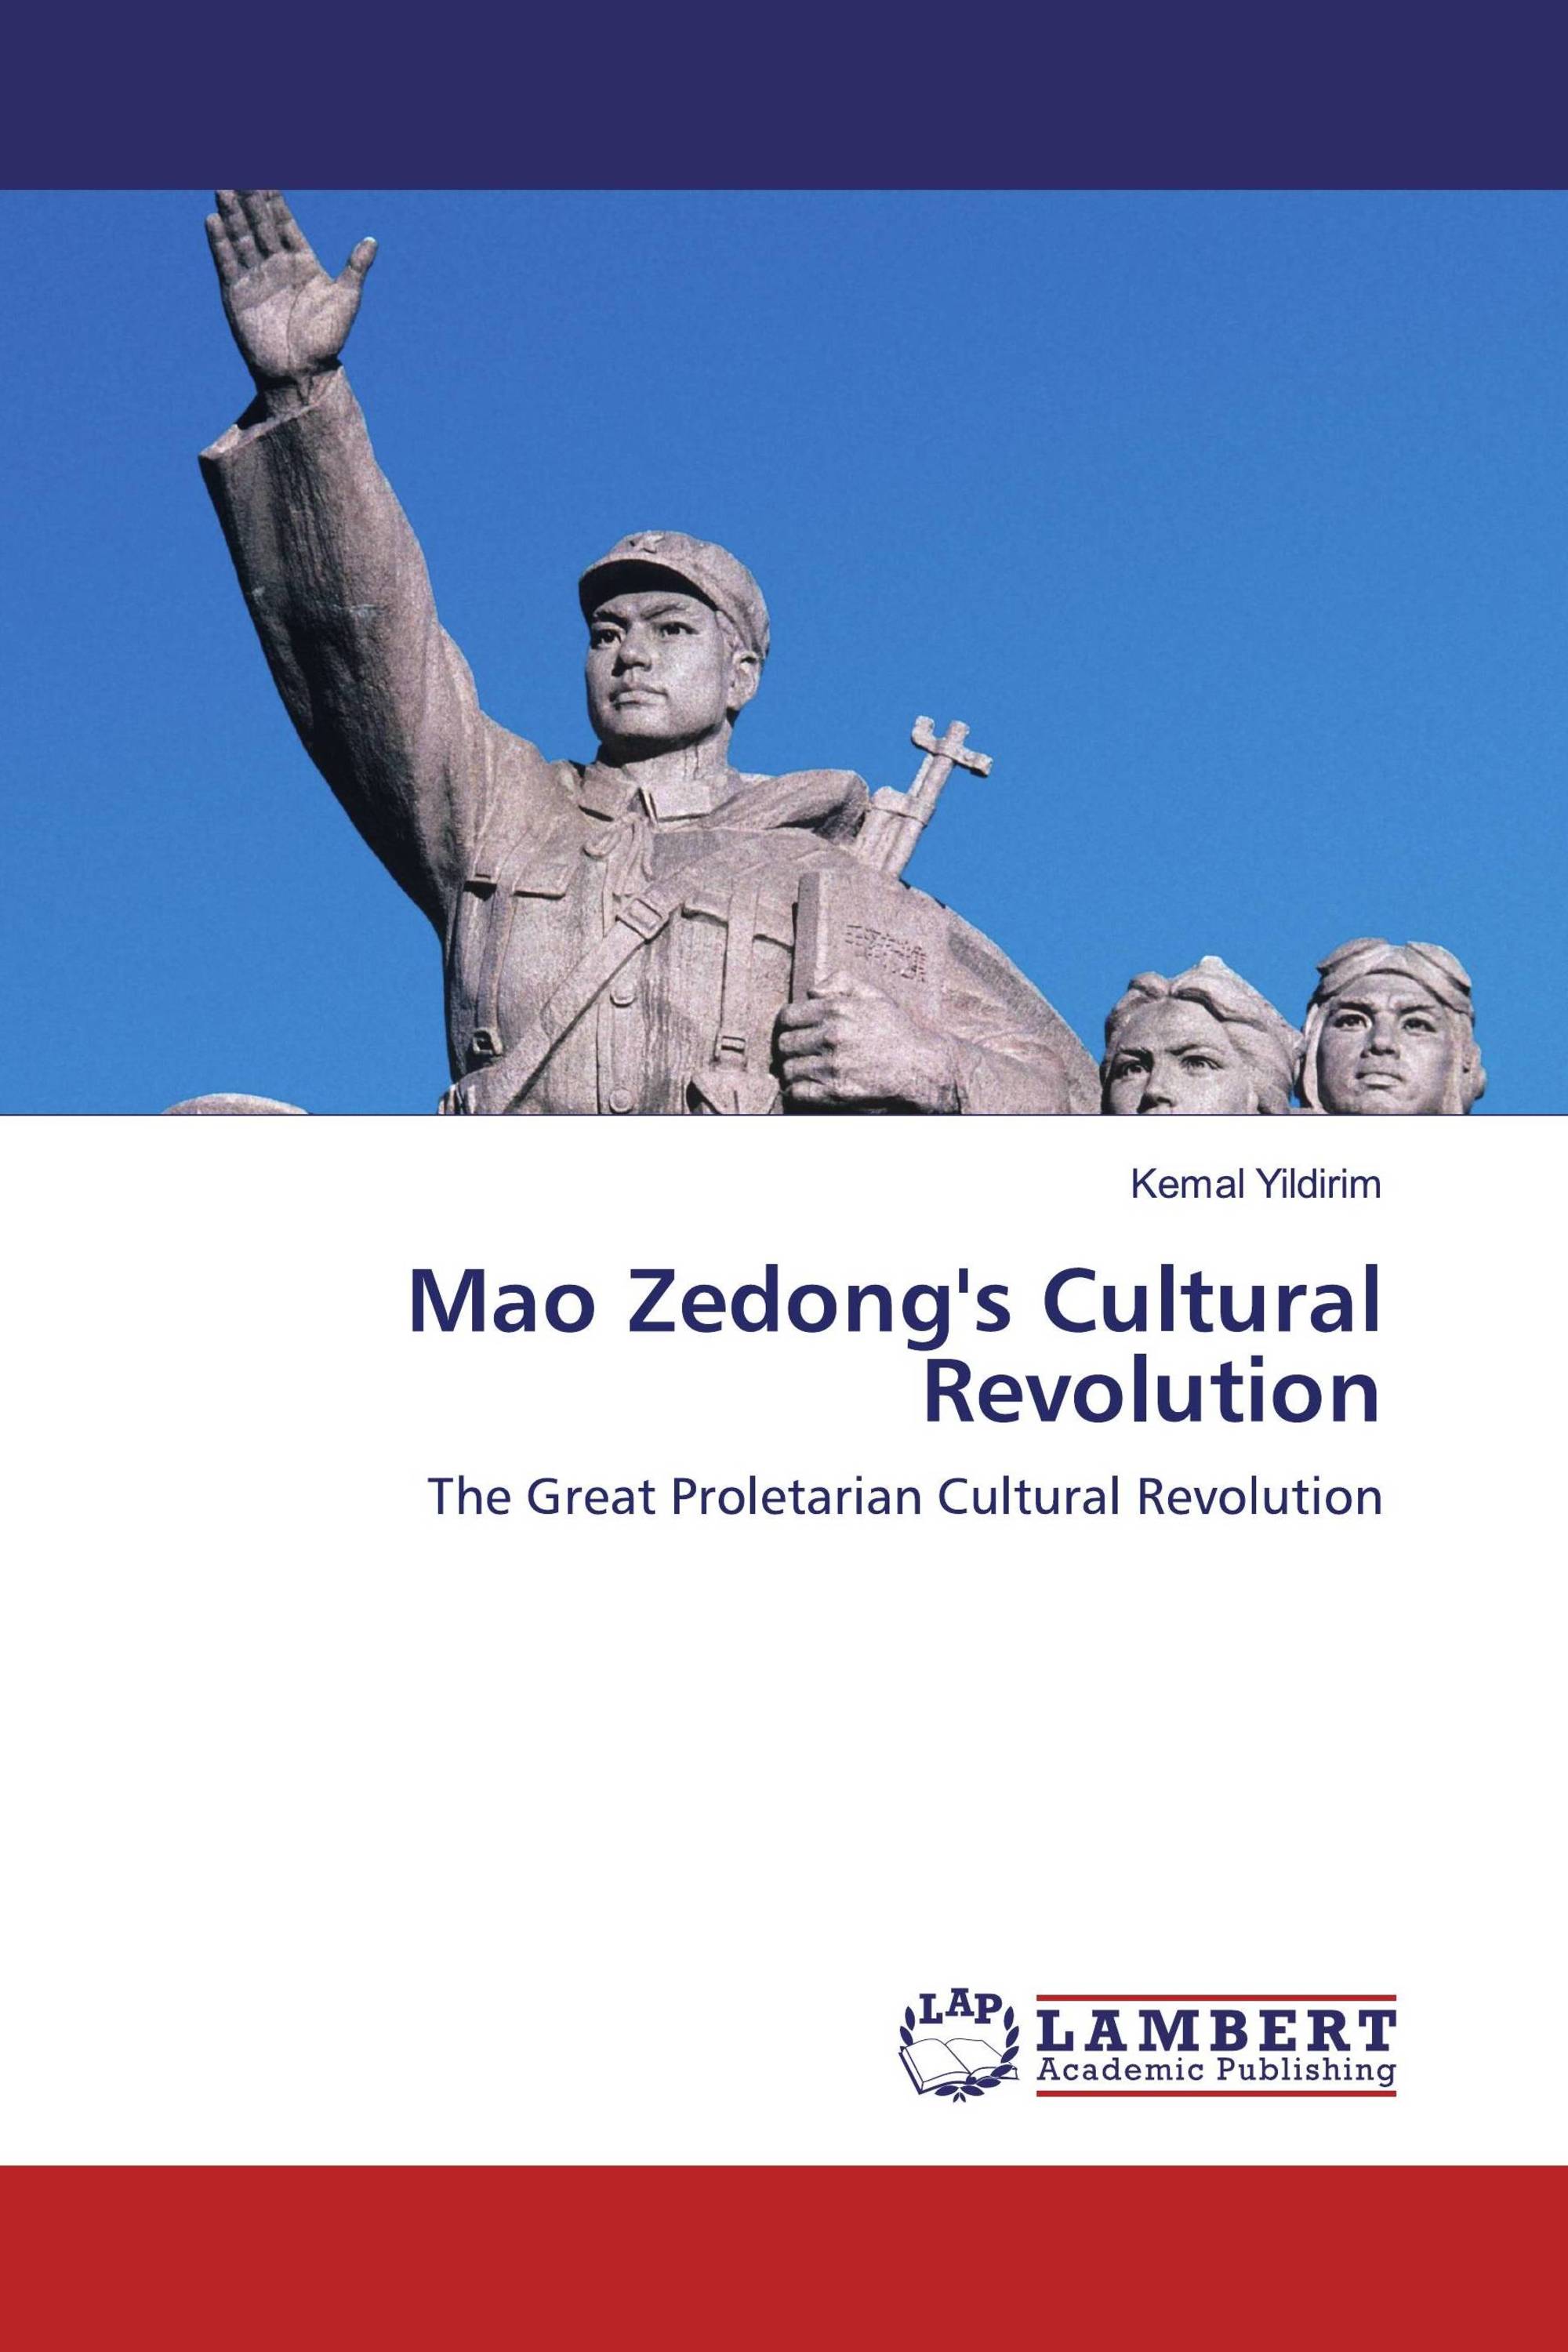 mao zedong cultural revolution essay